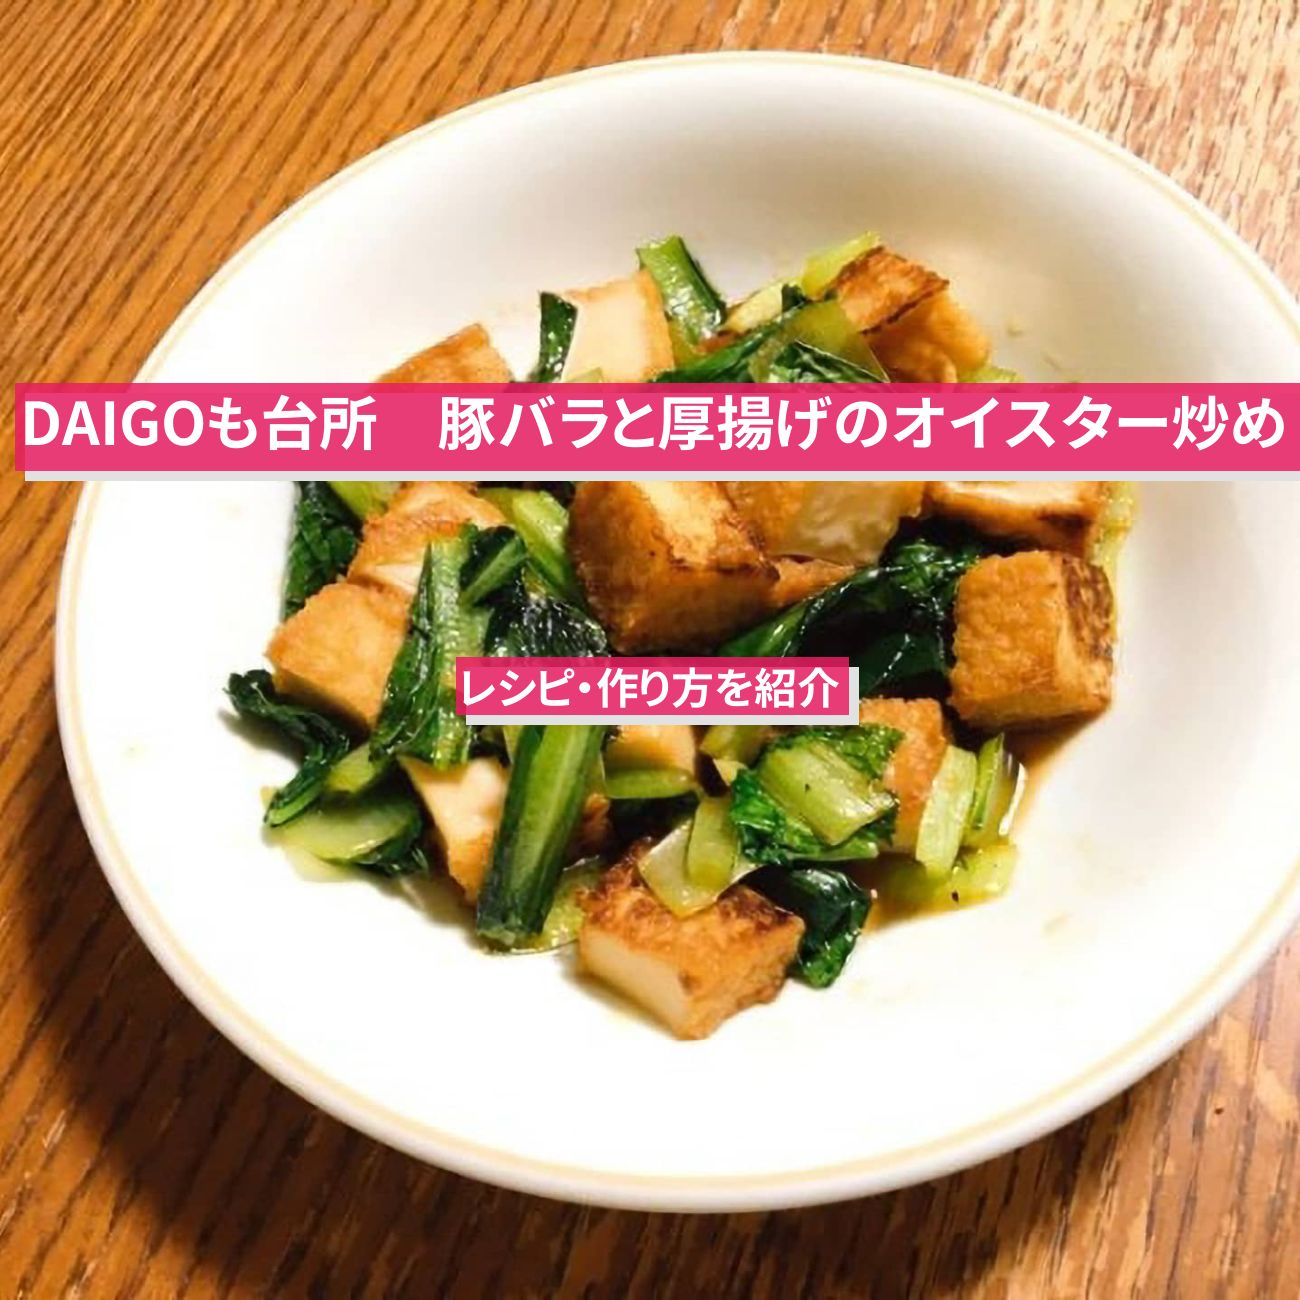 【DAIGOも台所】『豚バラと厚揚げのオイスター炒め』のレシピ・作り方を紹介〔ダイゴも台所〕